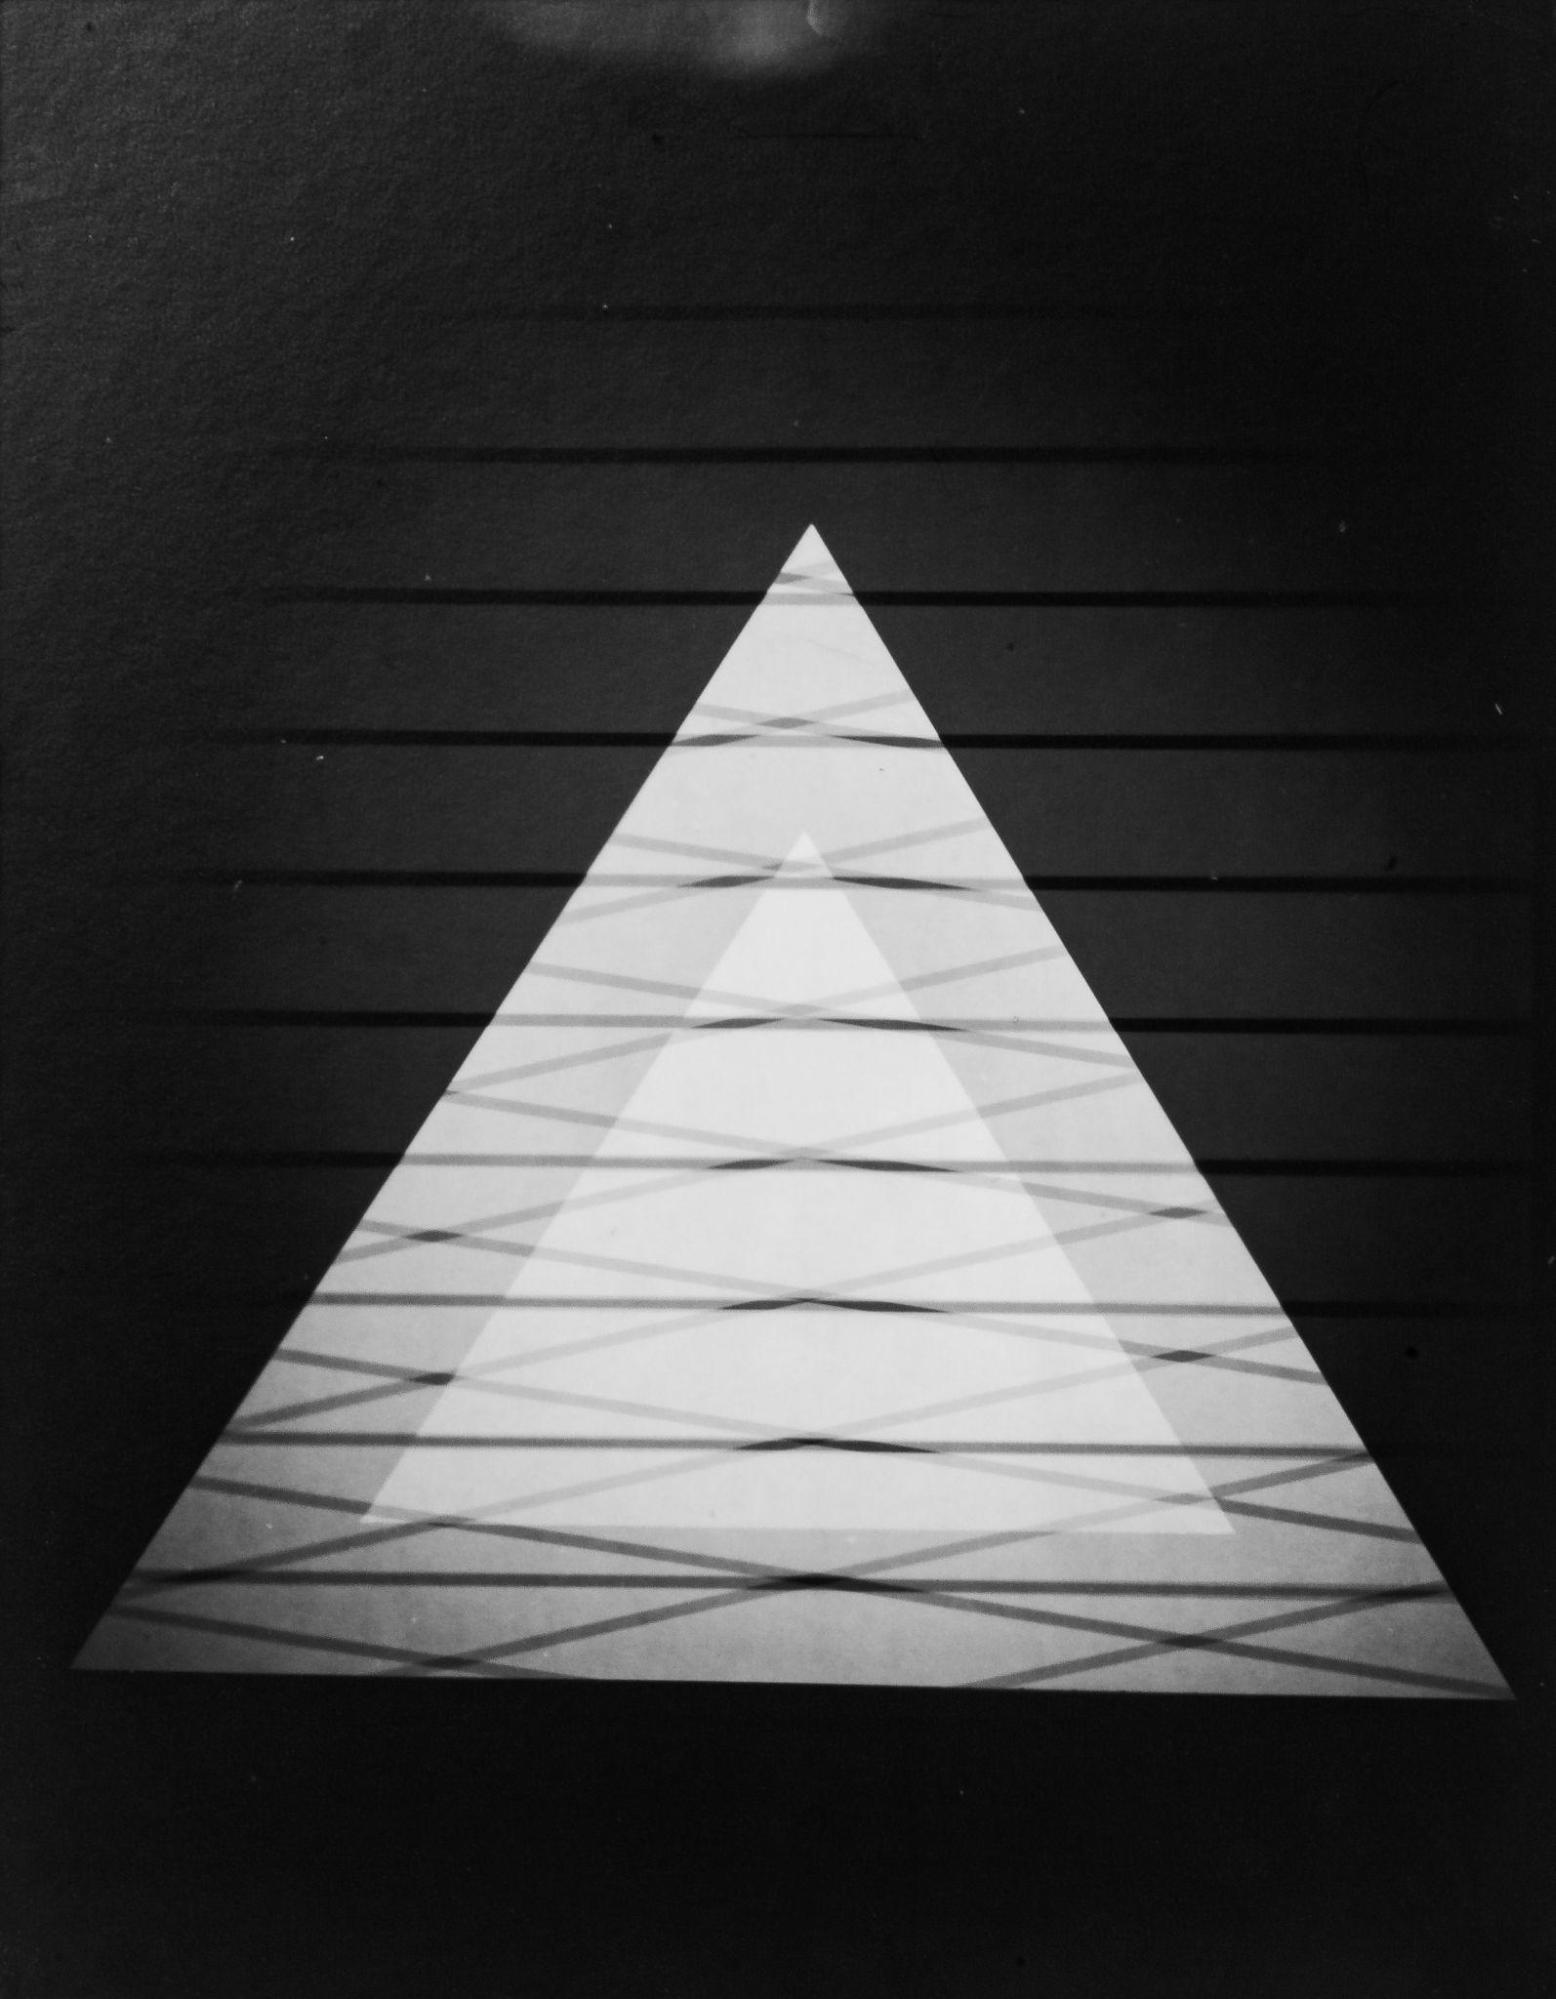 Juan Fernandez, Pyramid Scheme (Positive), 2021, Laminated silver gelatin print mounted on masonite, 14” x 11” x 1”